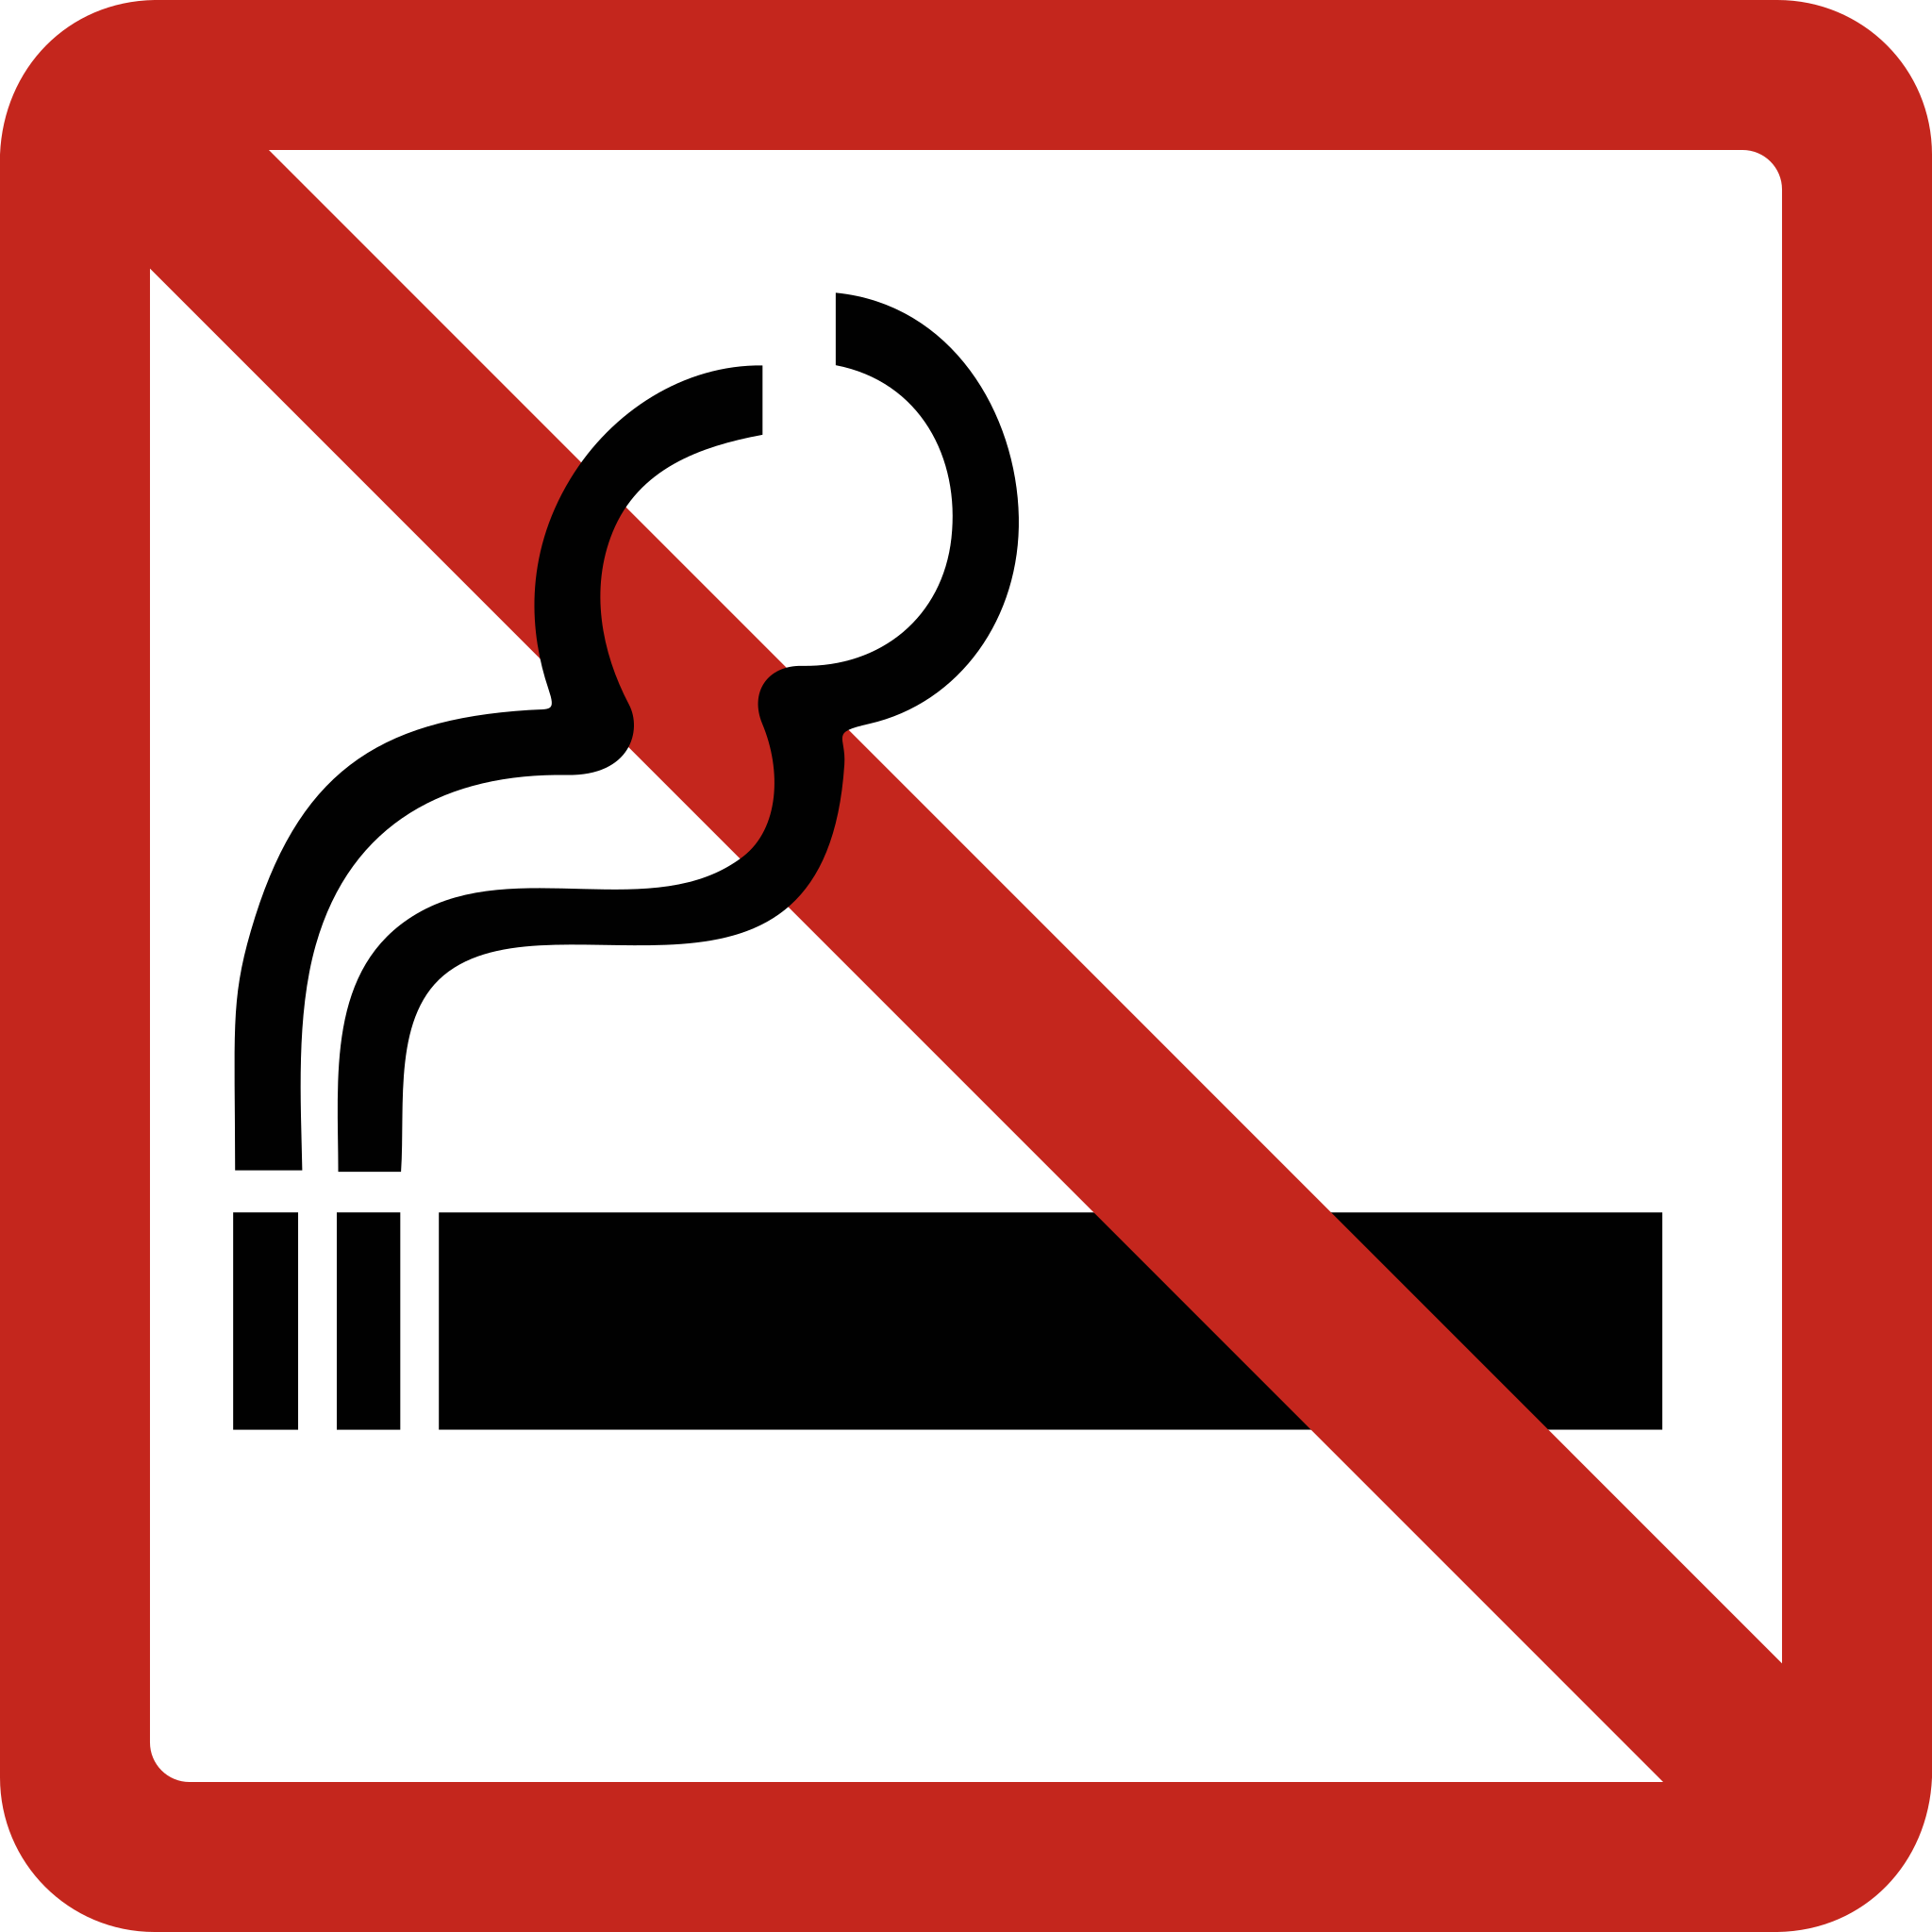 File:No smoking.svg - Wikimedia Commons